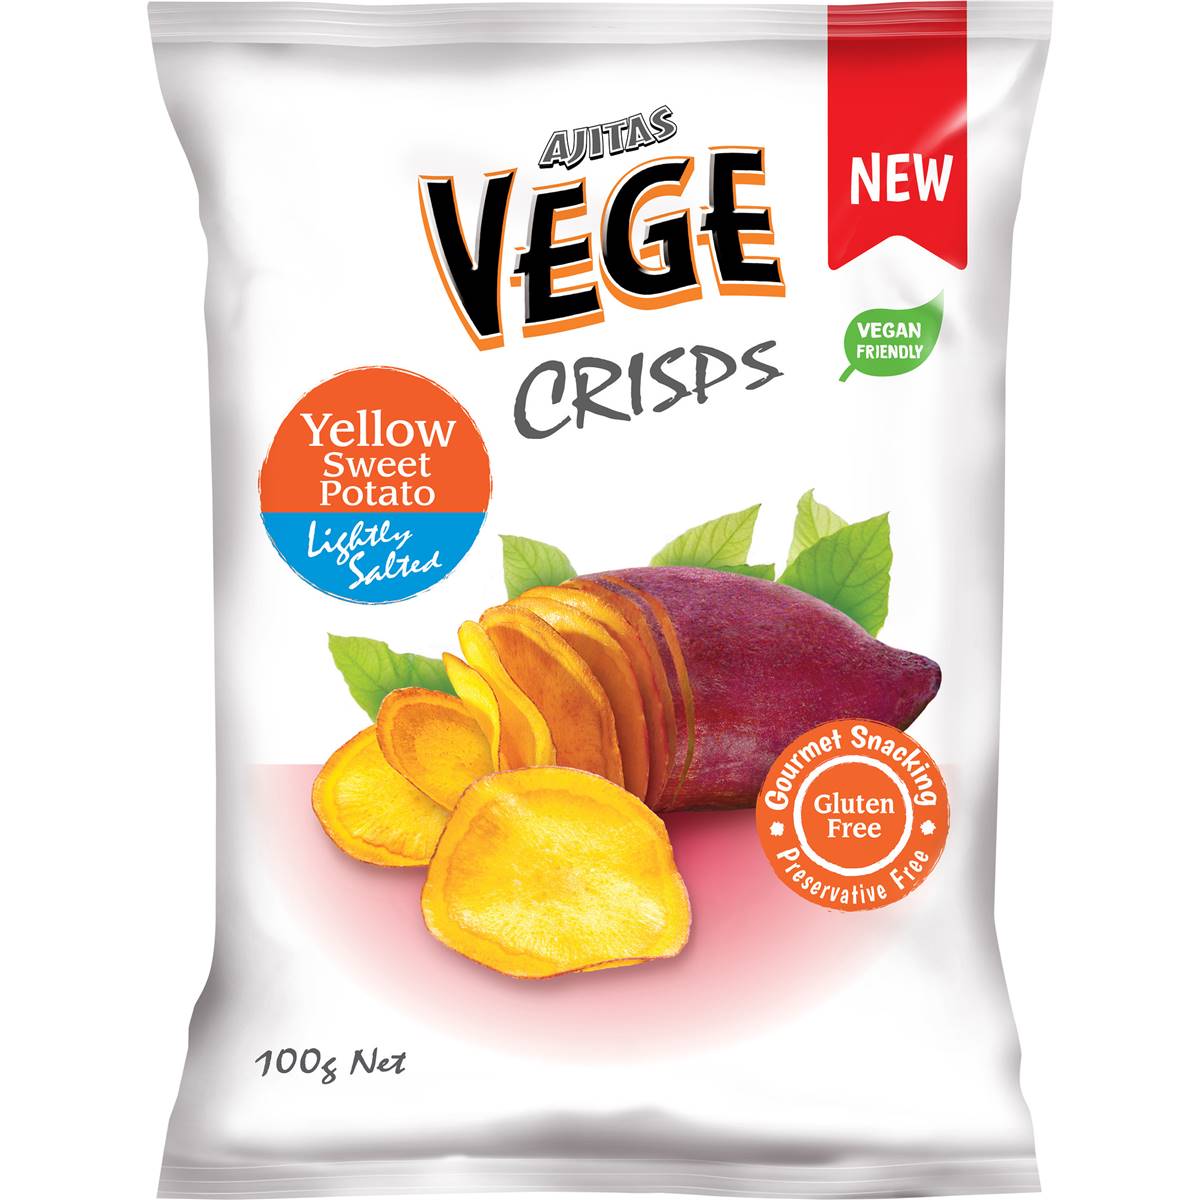 Calories in Vege Chips Yellow Sweet Potato Deli Crisps